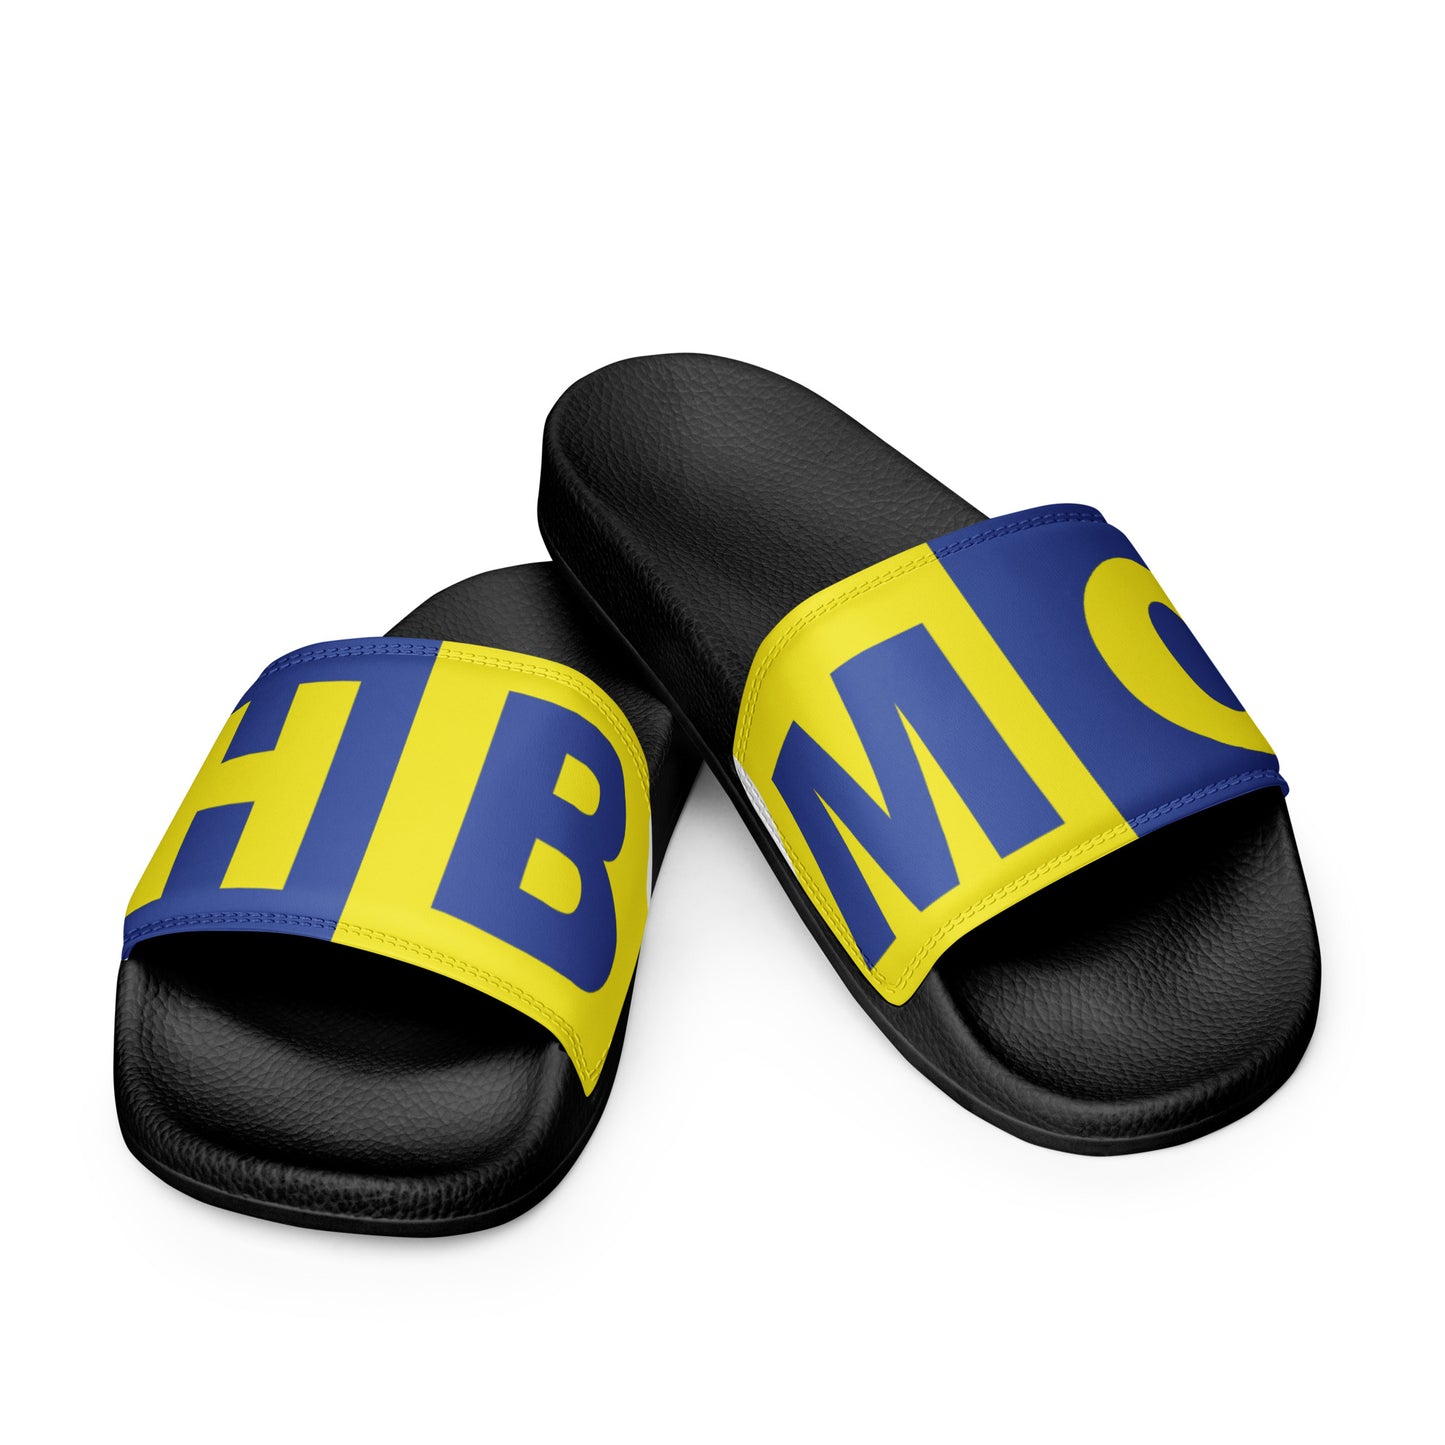 HBMC slides